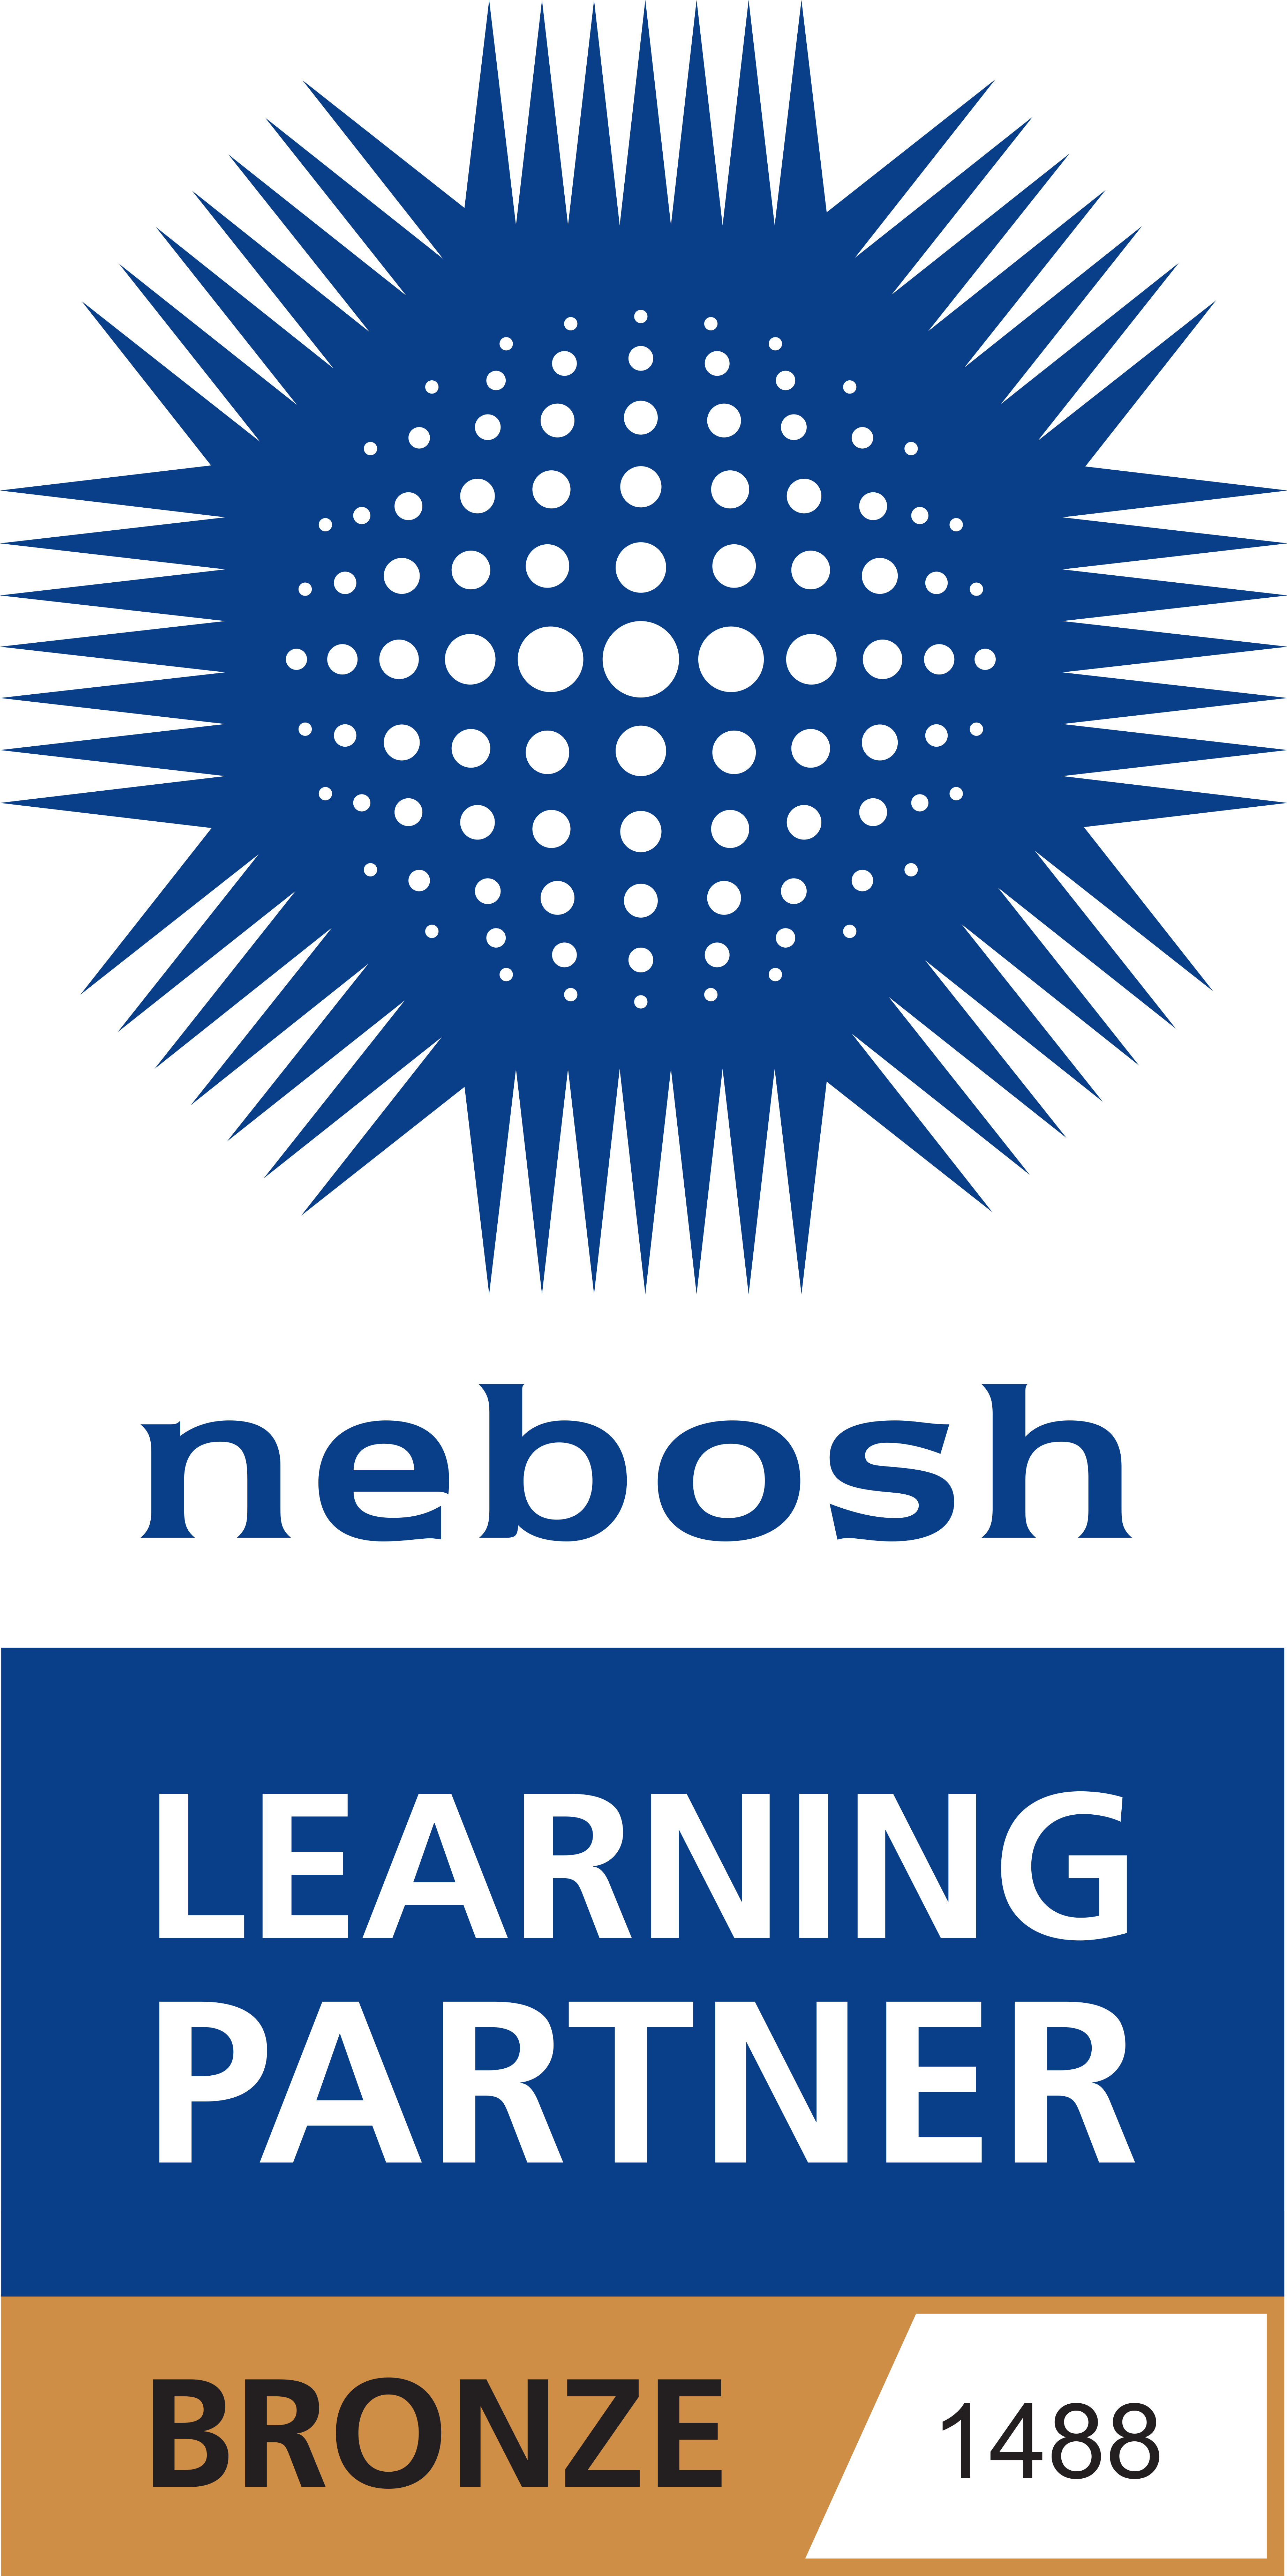 Nebosh logo